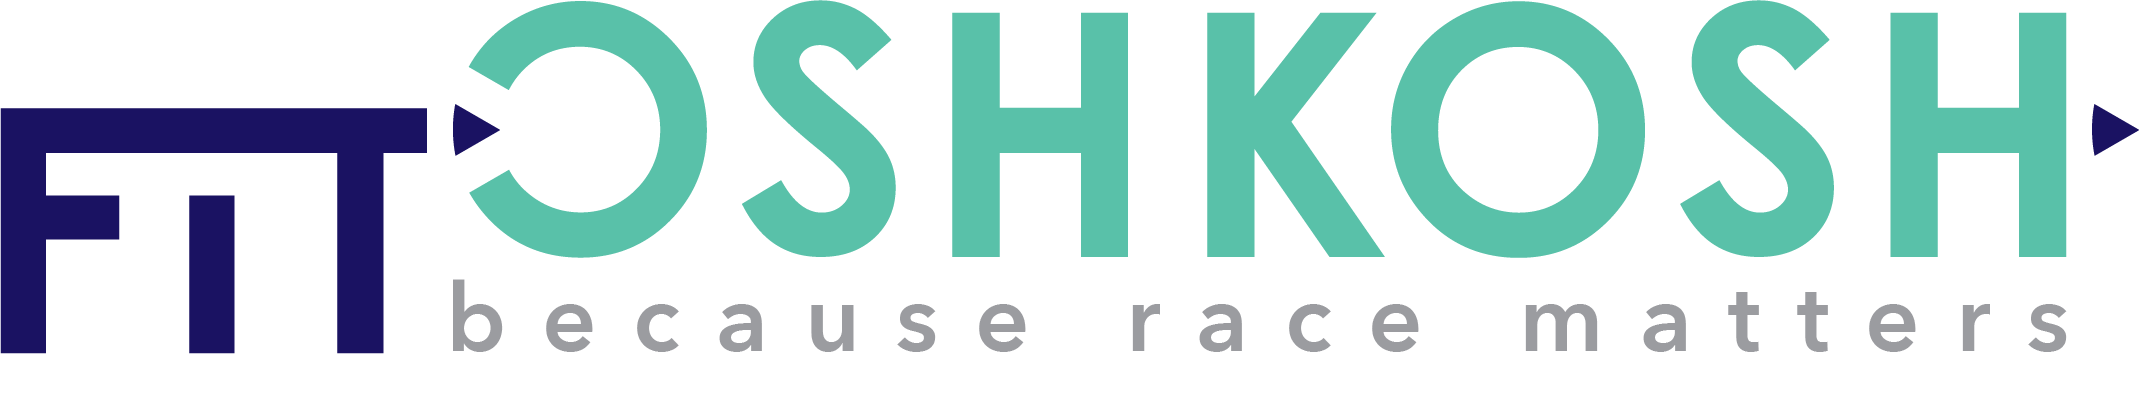 Fit Oshkosh, Inc logo